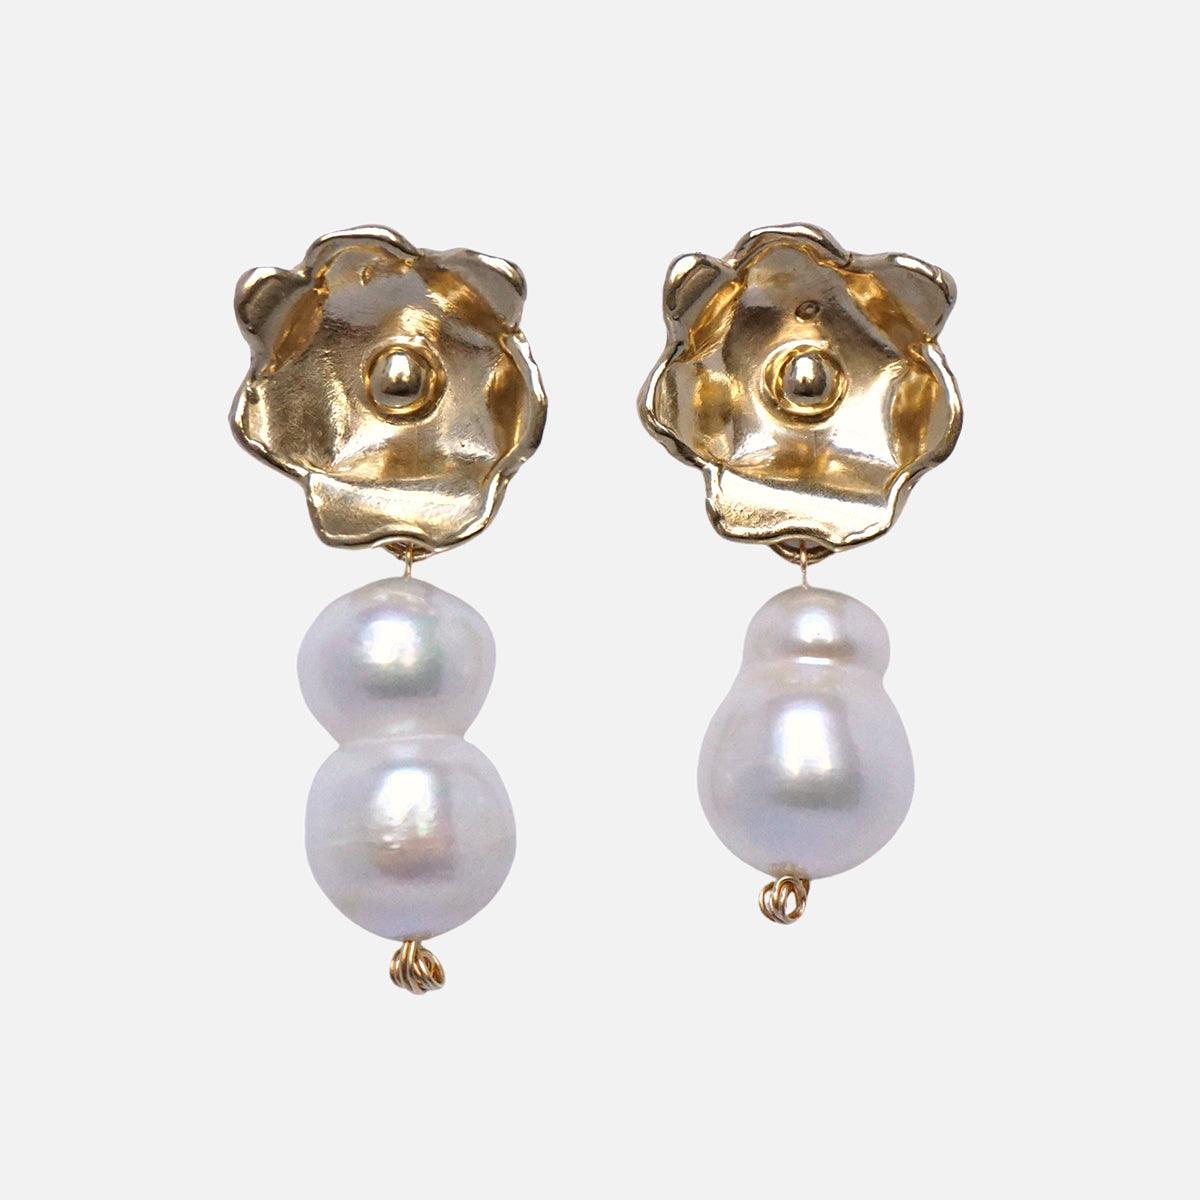 Anita Berisha In The Bloom Of Life Earrings - At Present Jewelry